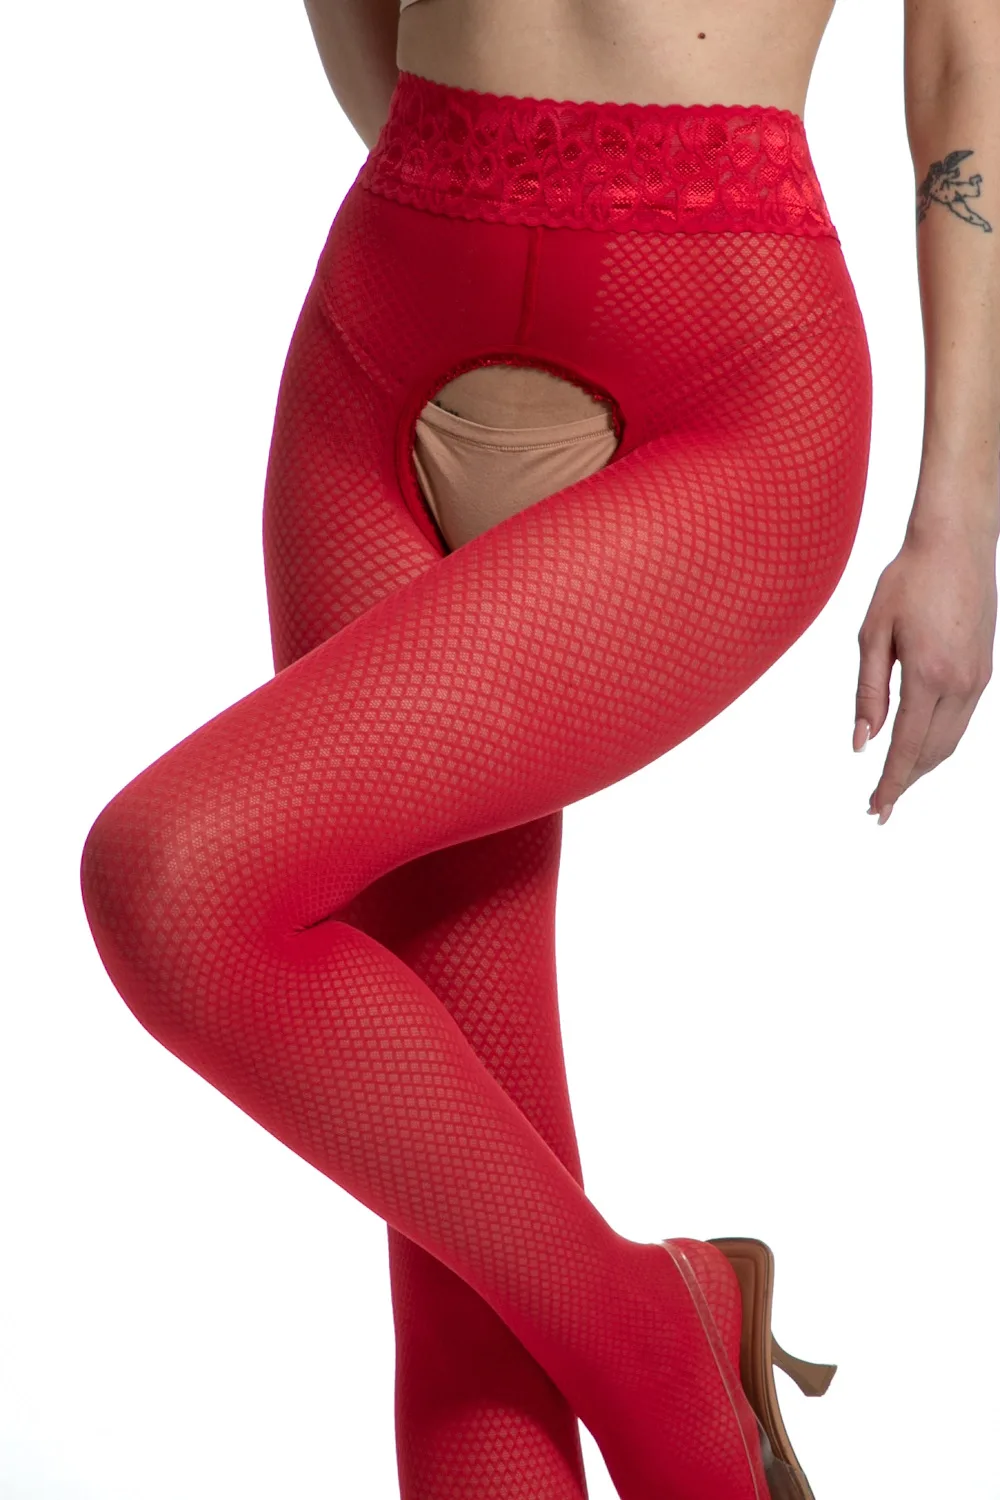 Productfoto kruisloze panty nymph red op model